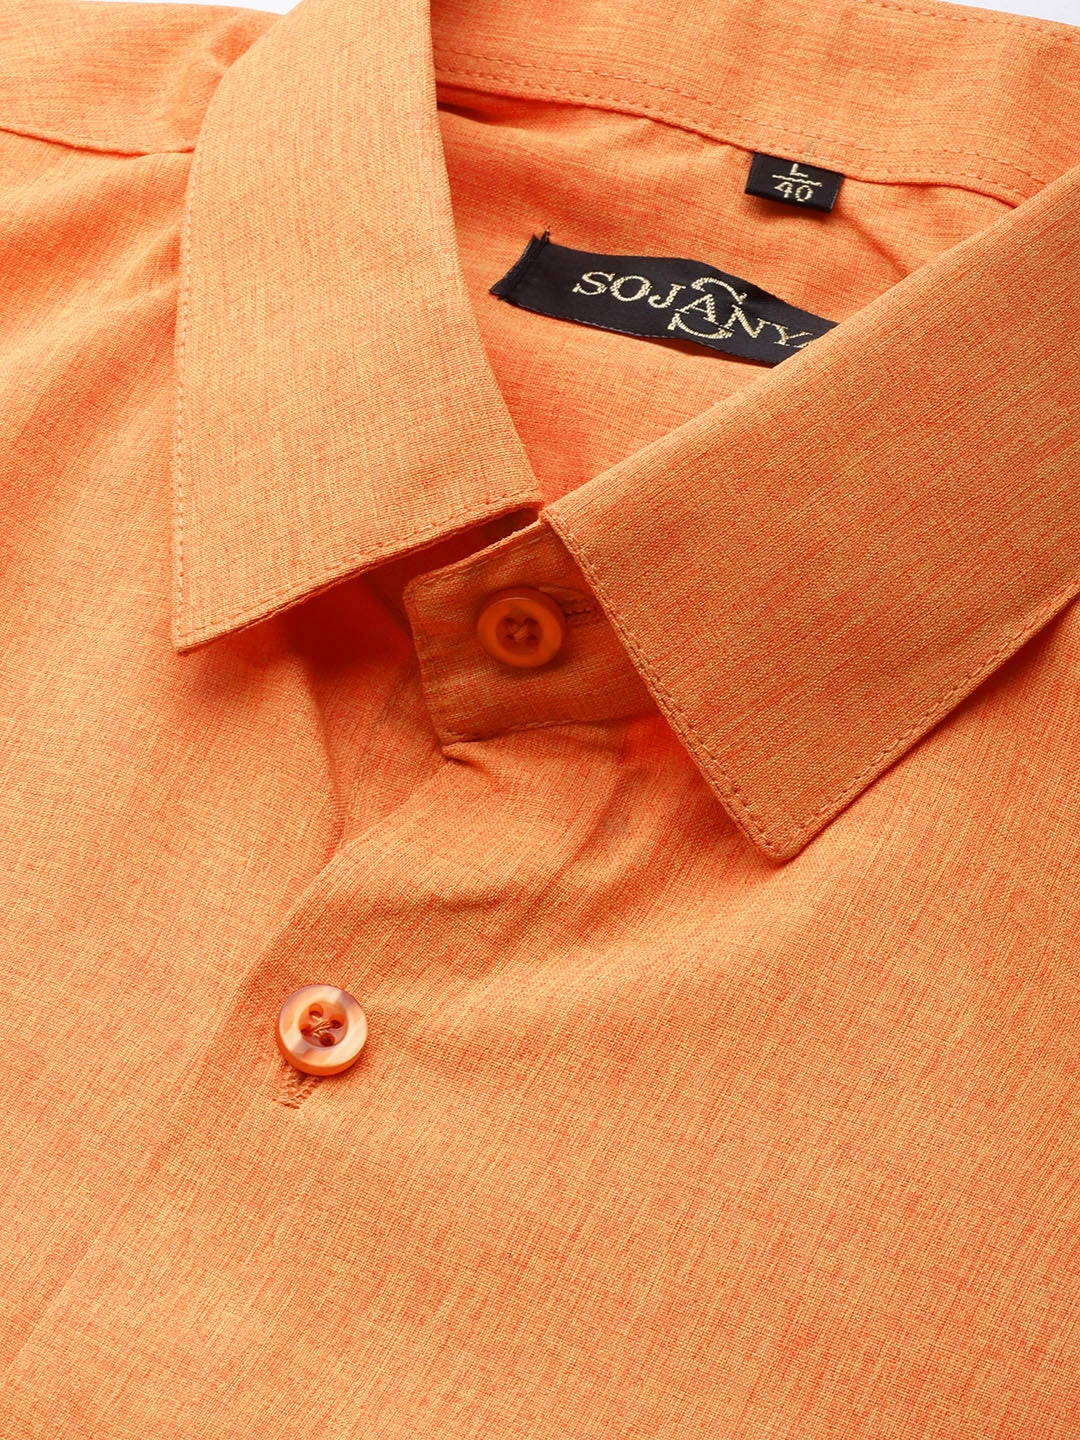 Men's Cotton Orange Casual Shirt